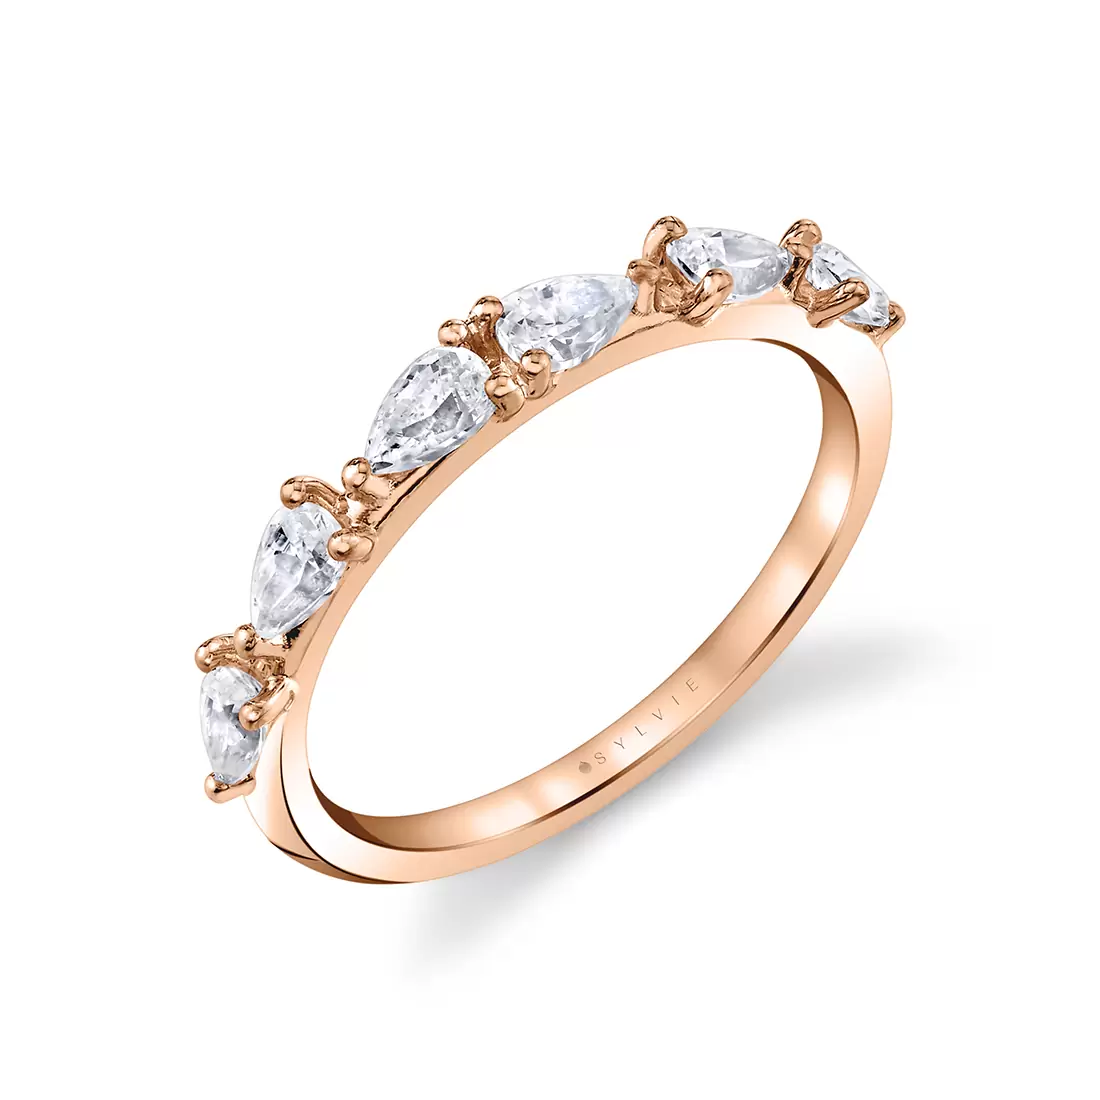 Rose gold, pear-shaped diamond wedding ring